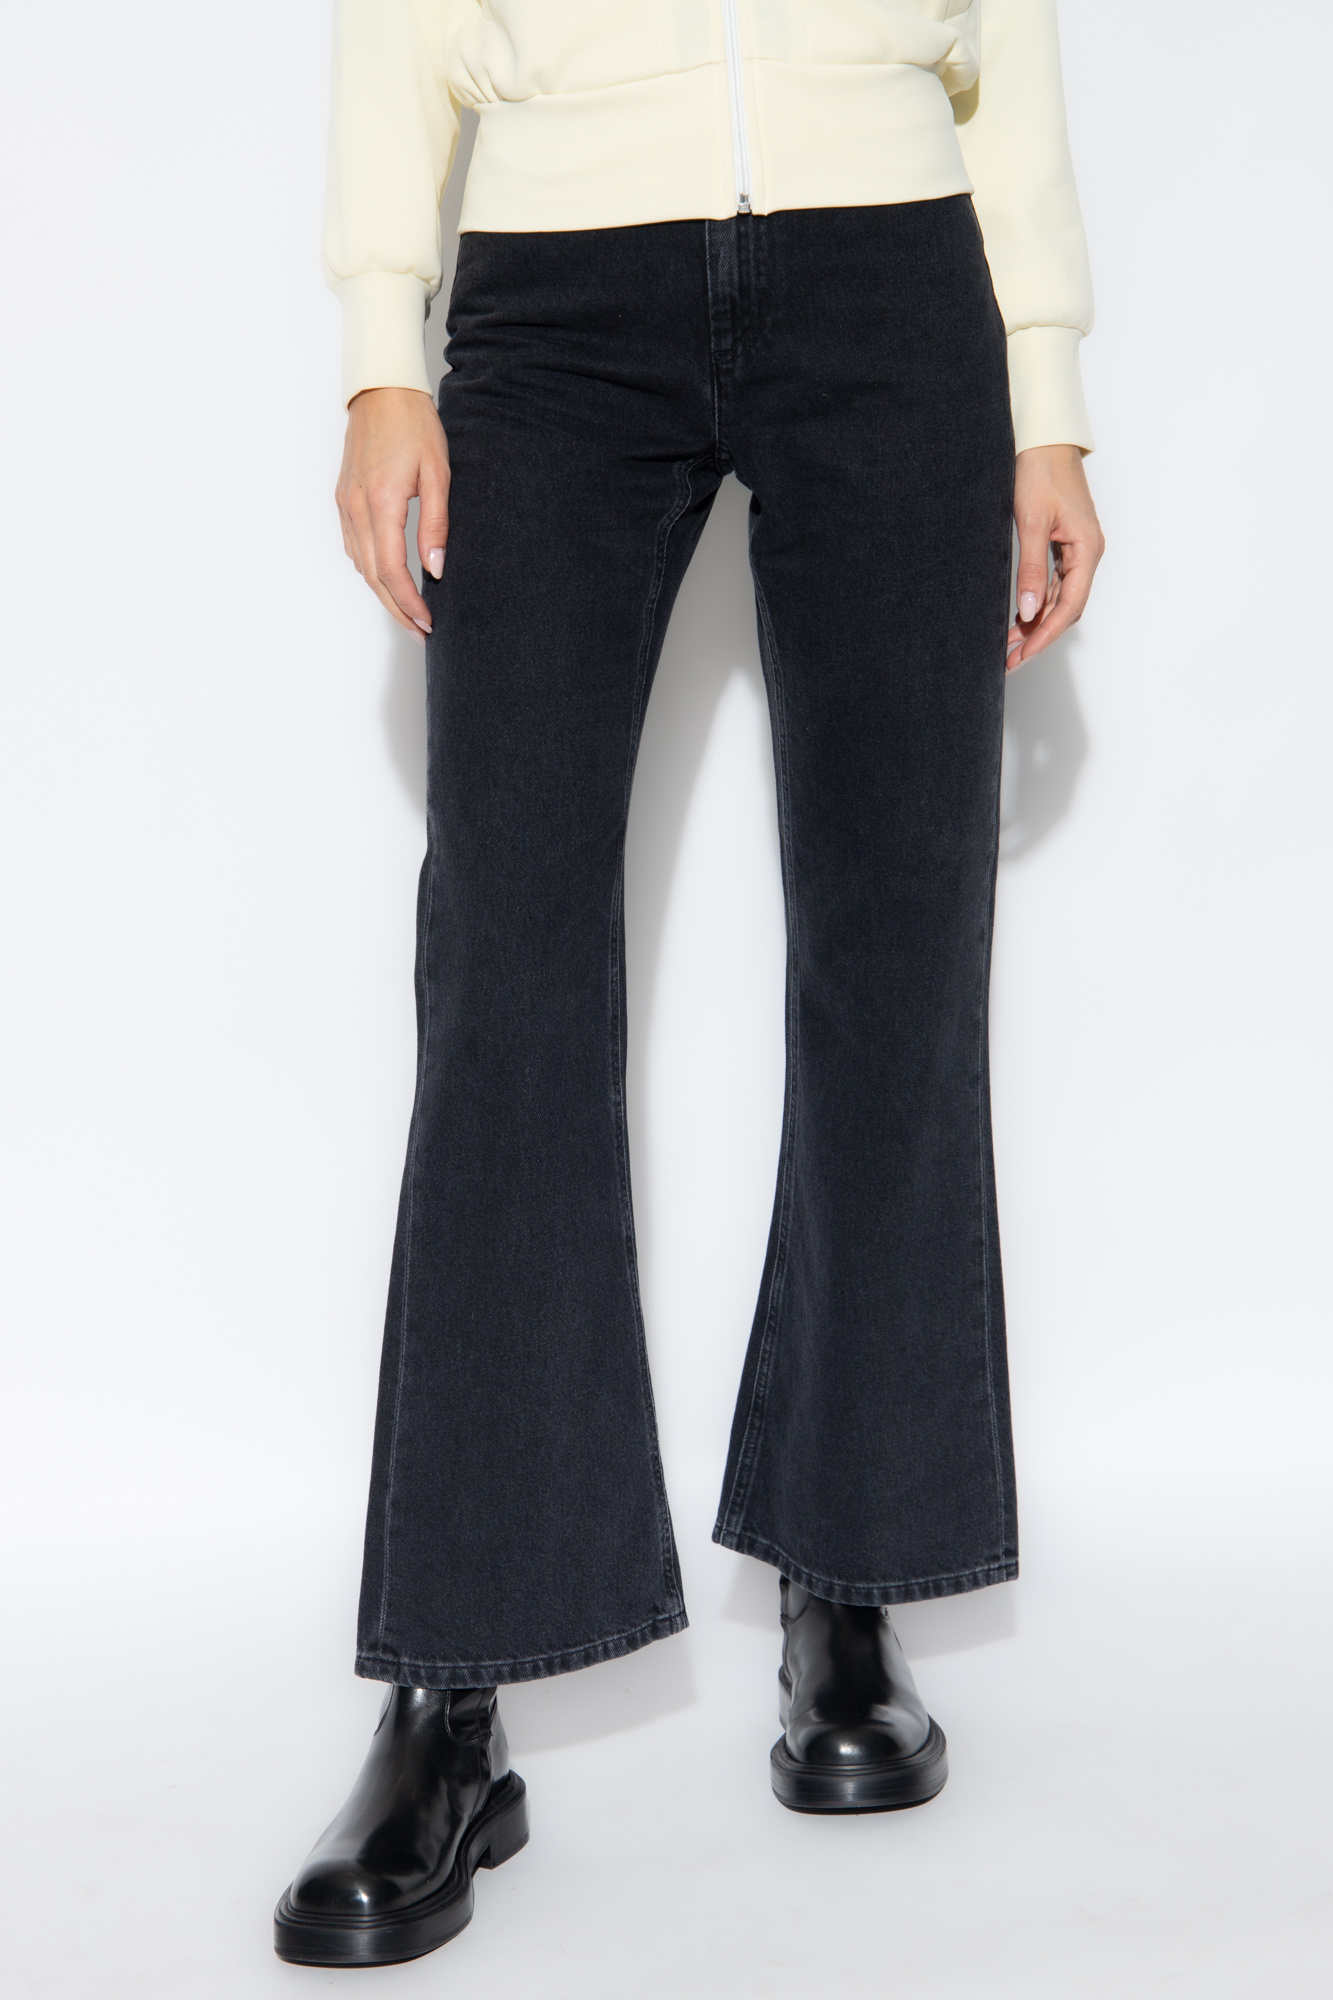 Carhartt WIP ‘Varney’ jeans